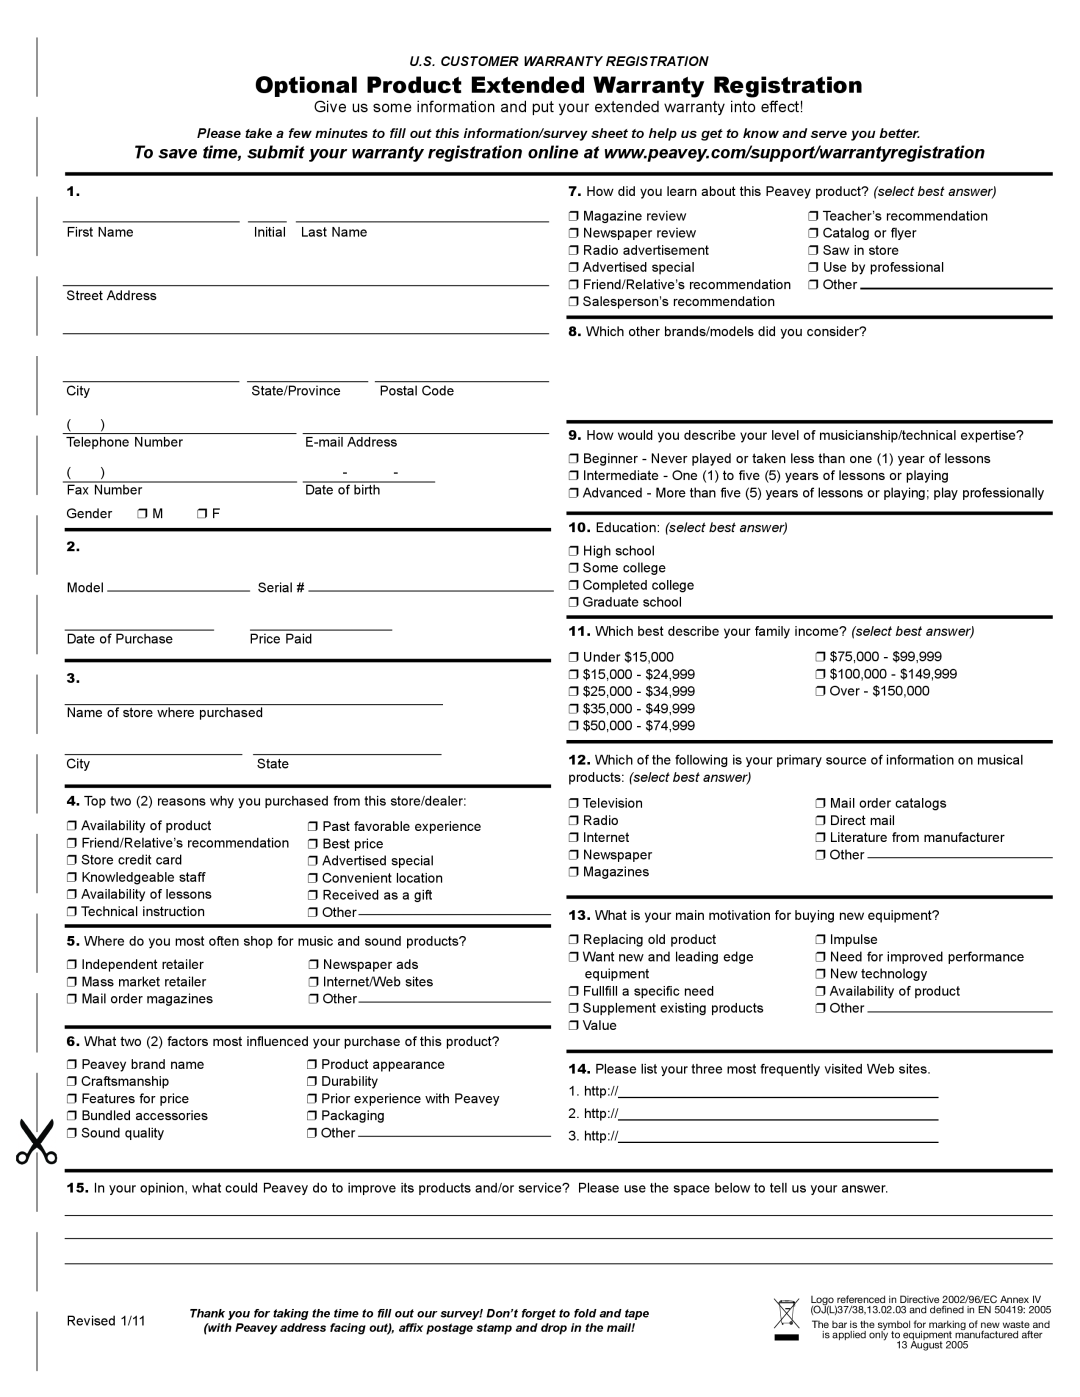 Peavey PV215EQ manual Optional Product Extended Warranty Registration, U.S. Customer Warranty Registration, Revised 1/11 